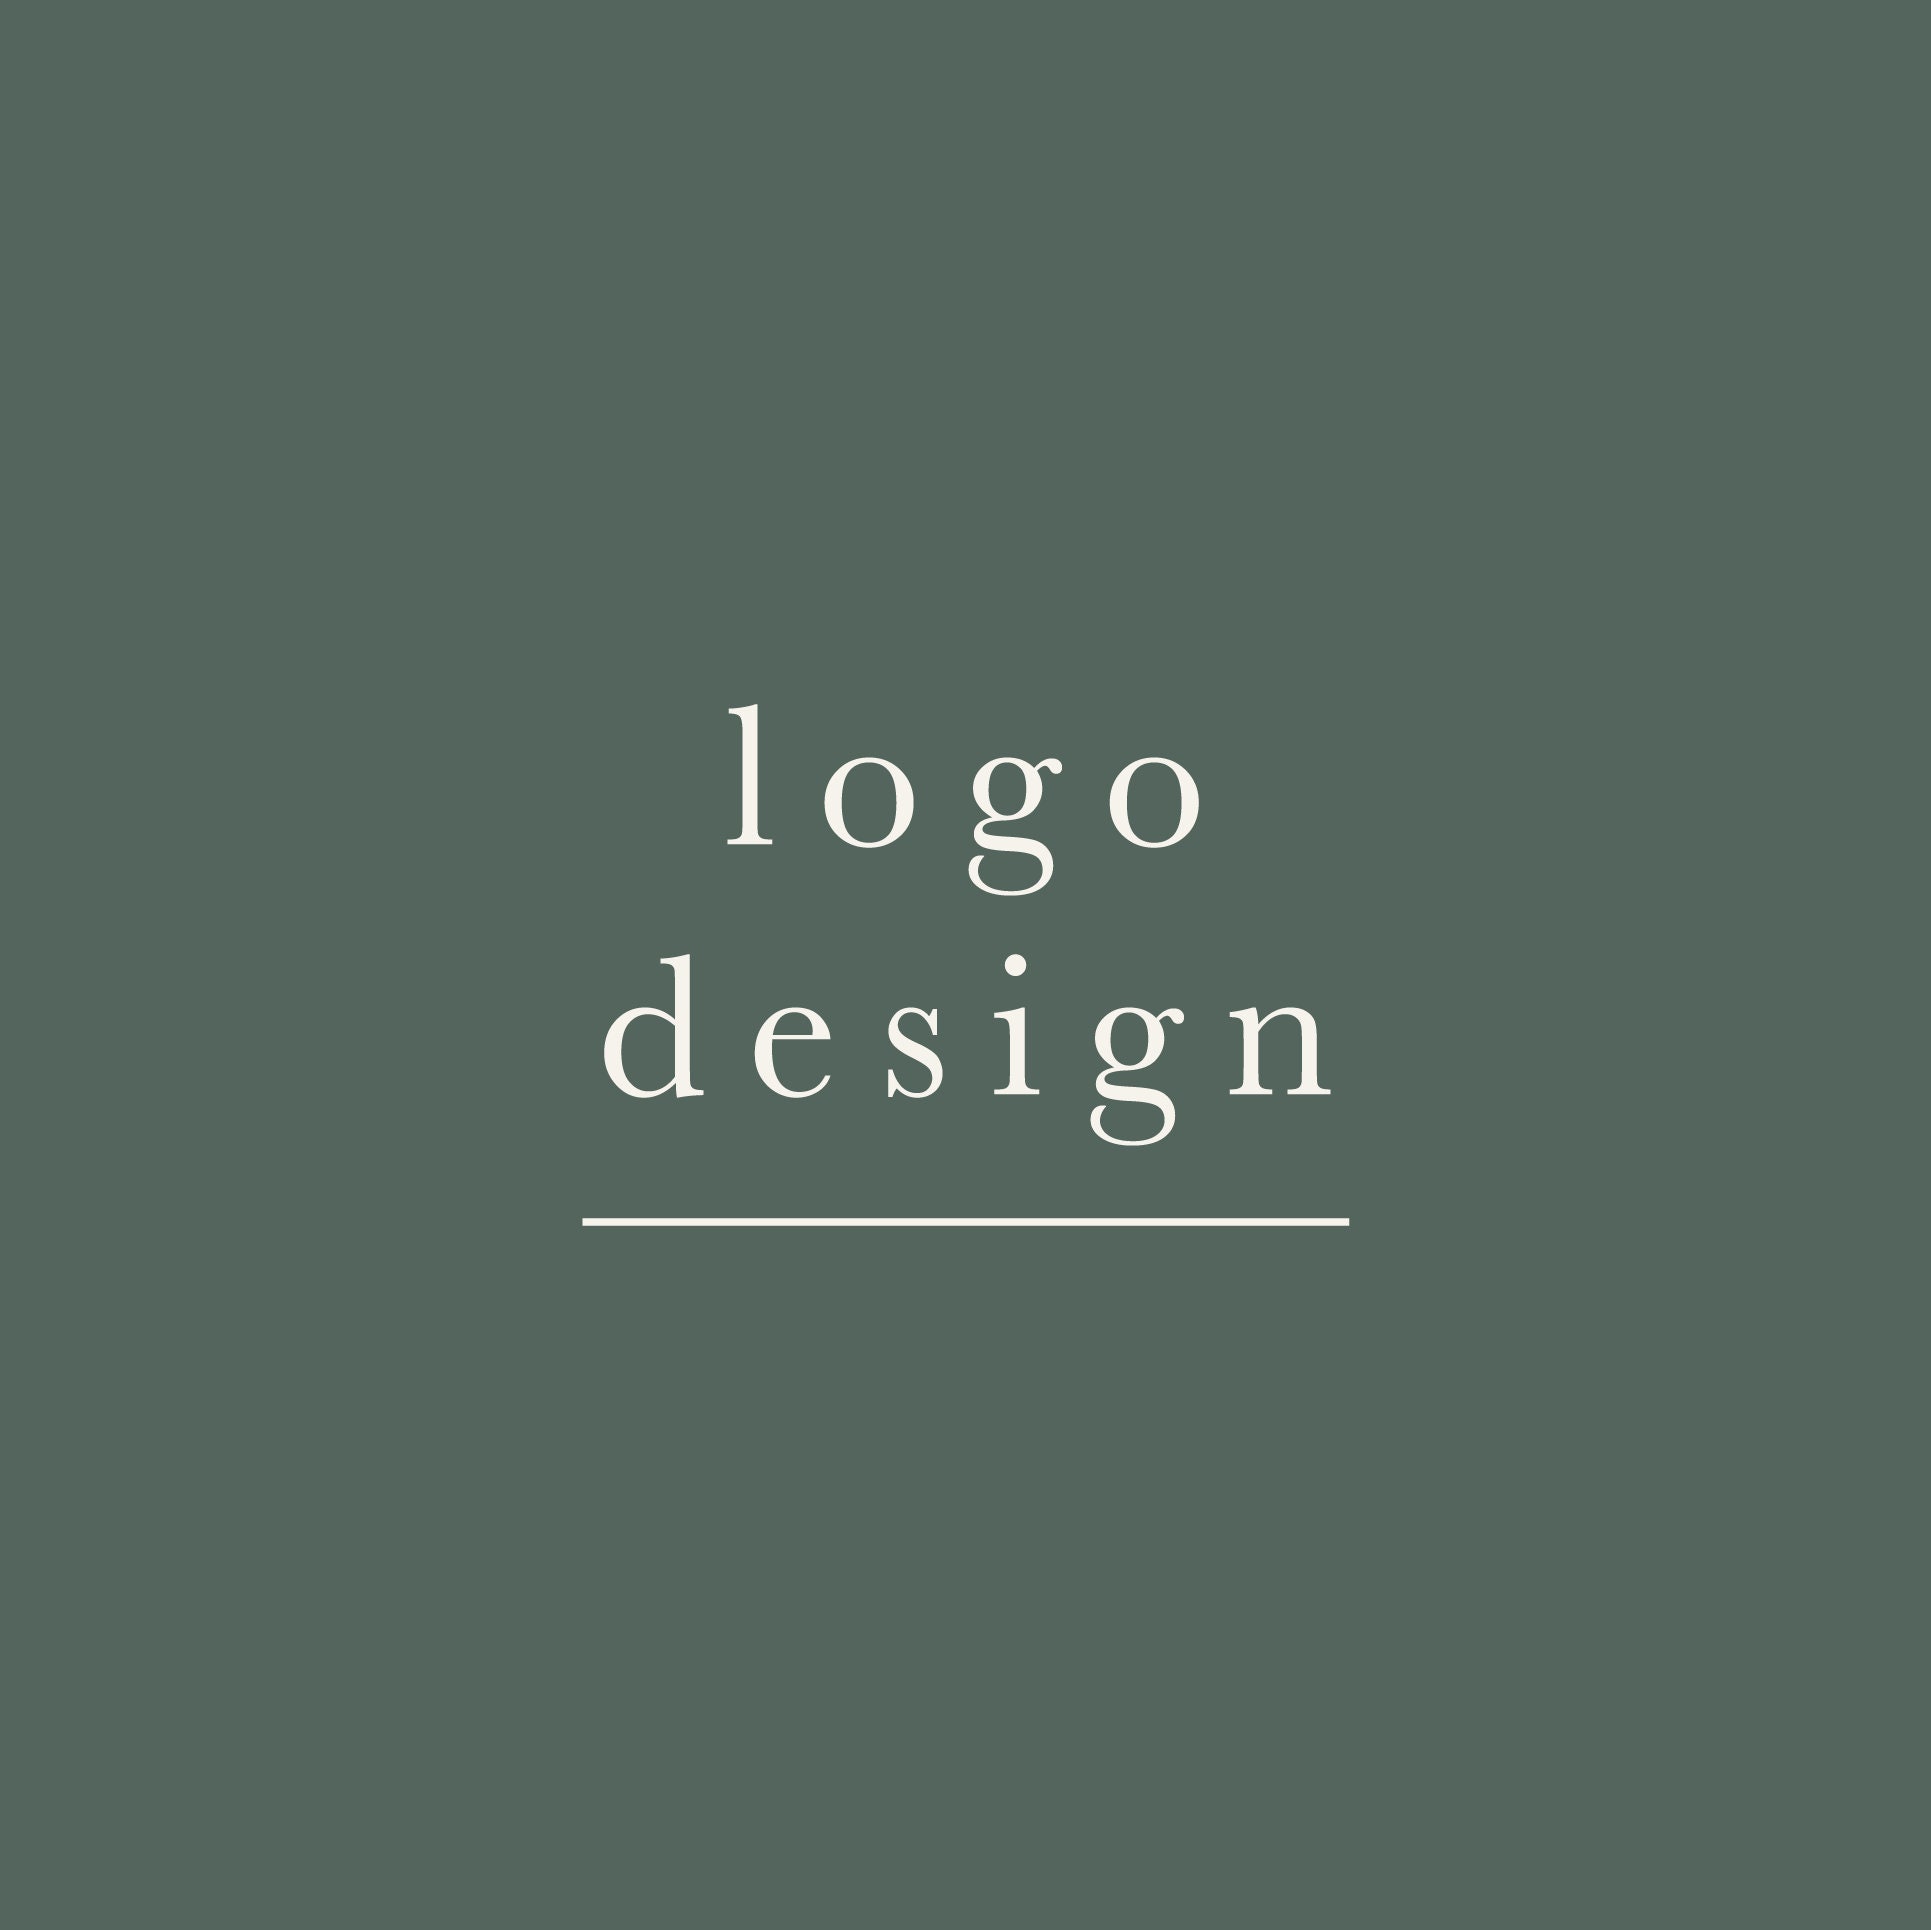 Custom Logo Design Company Logo Small Business Logo Etsy